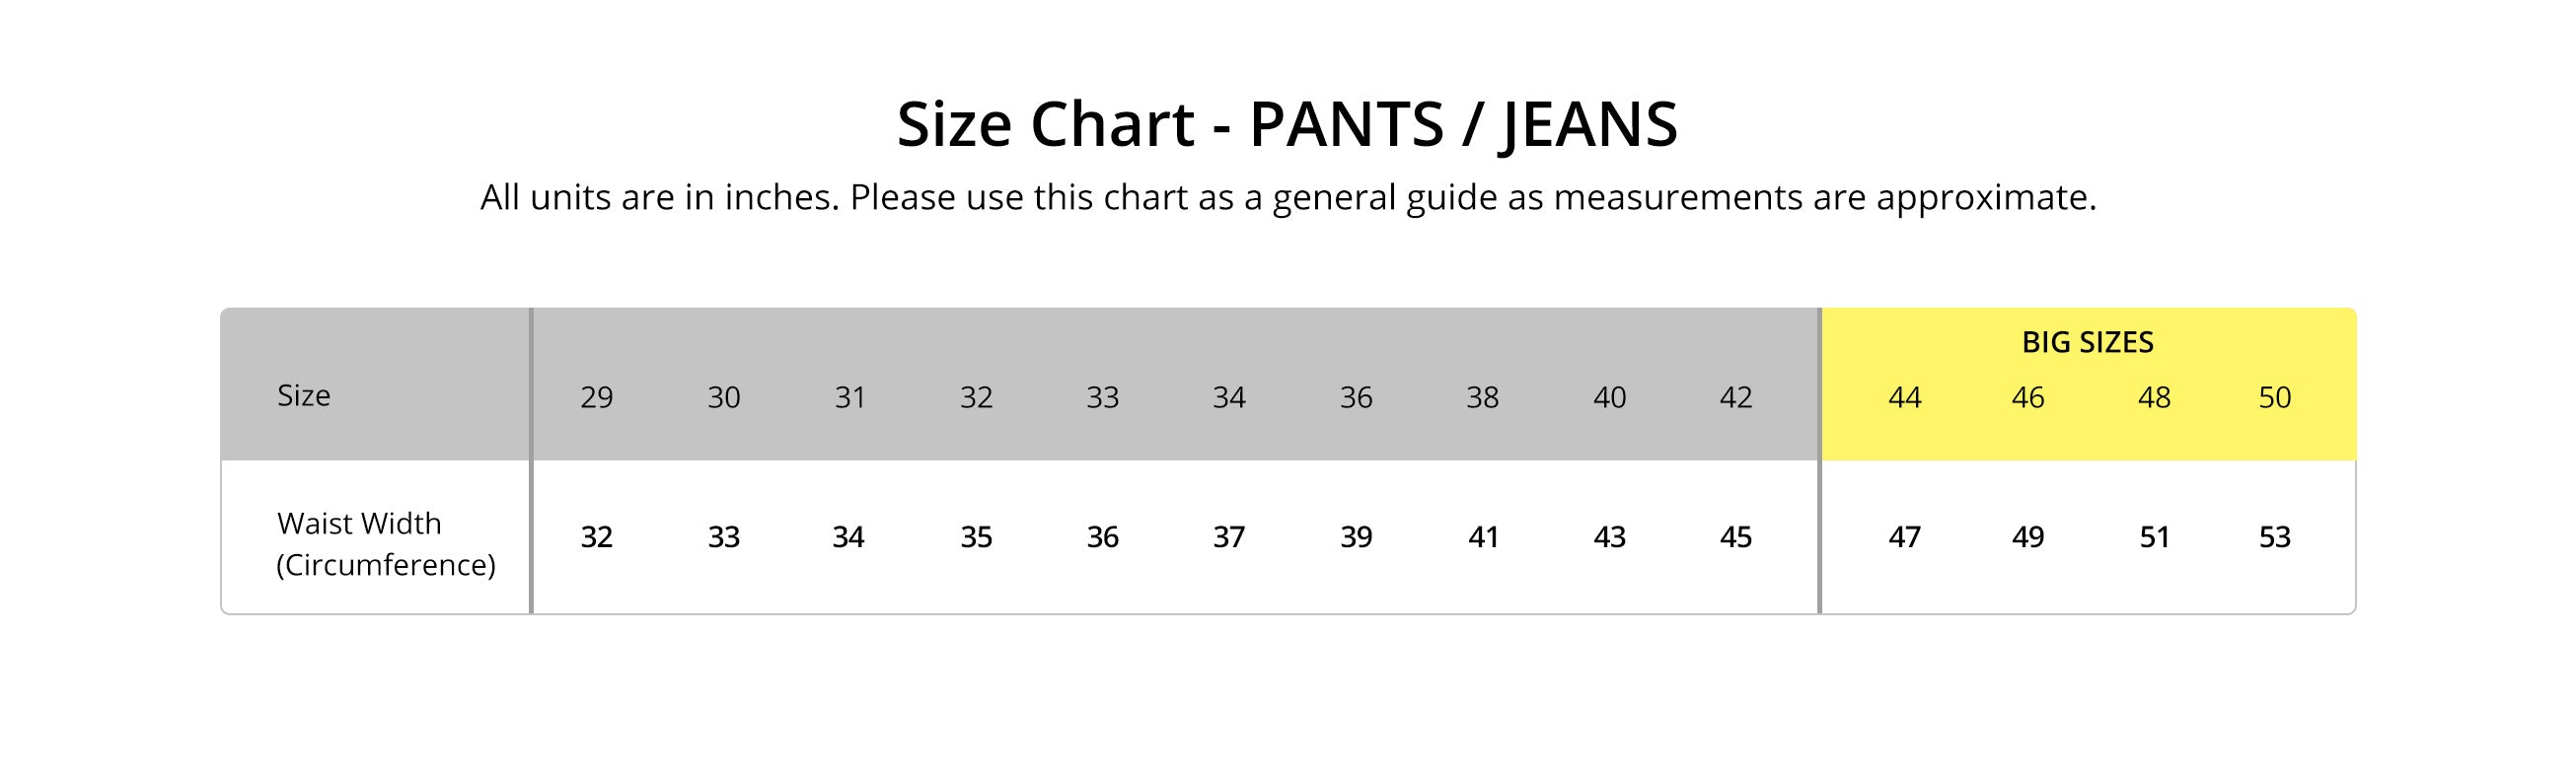 James Size Chart Women